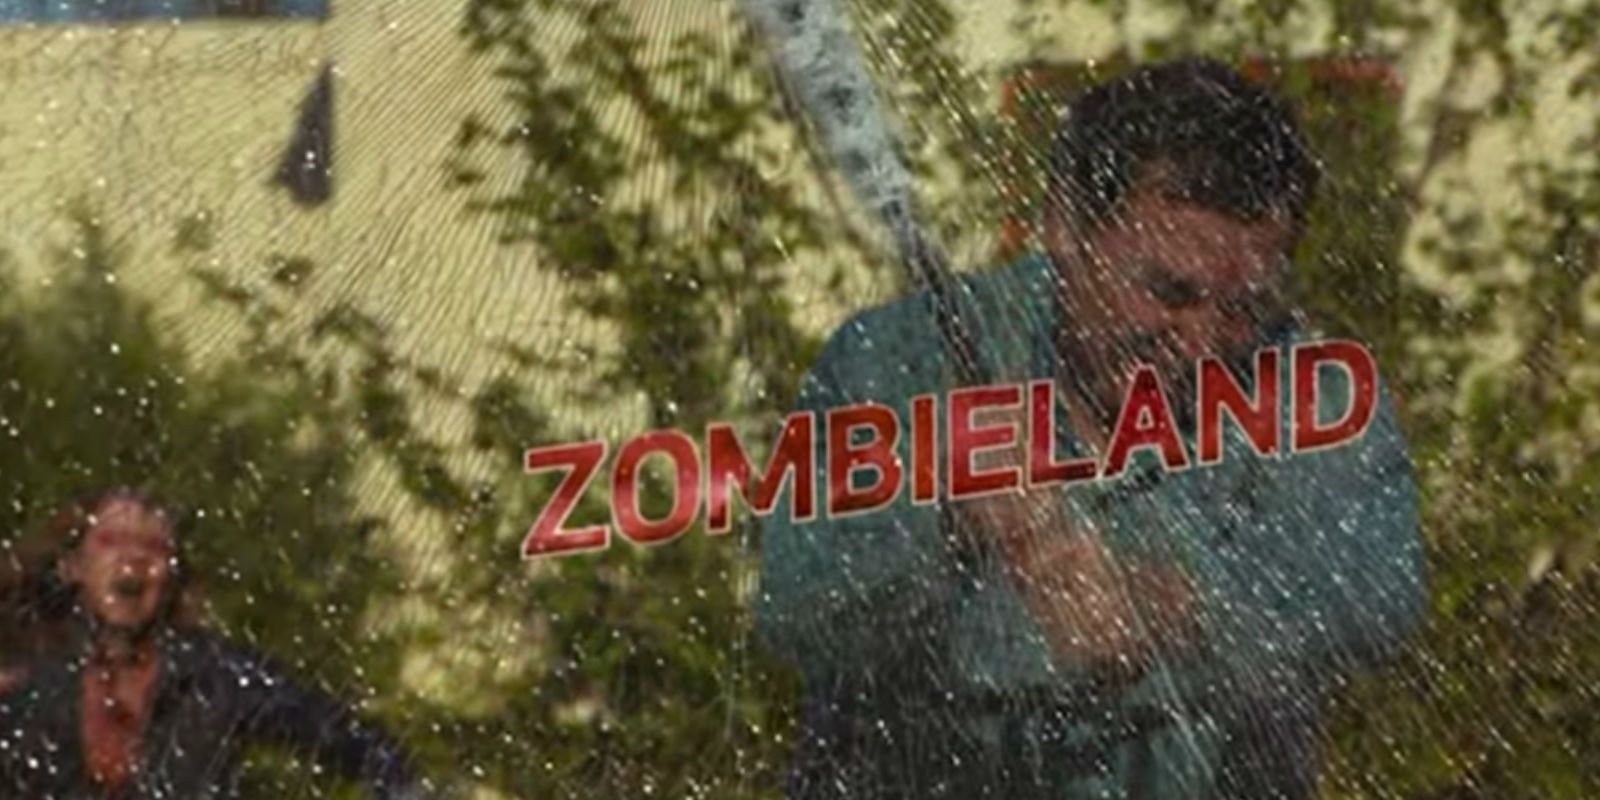 Zombieland opening credits